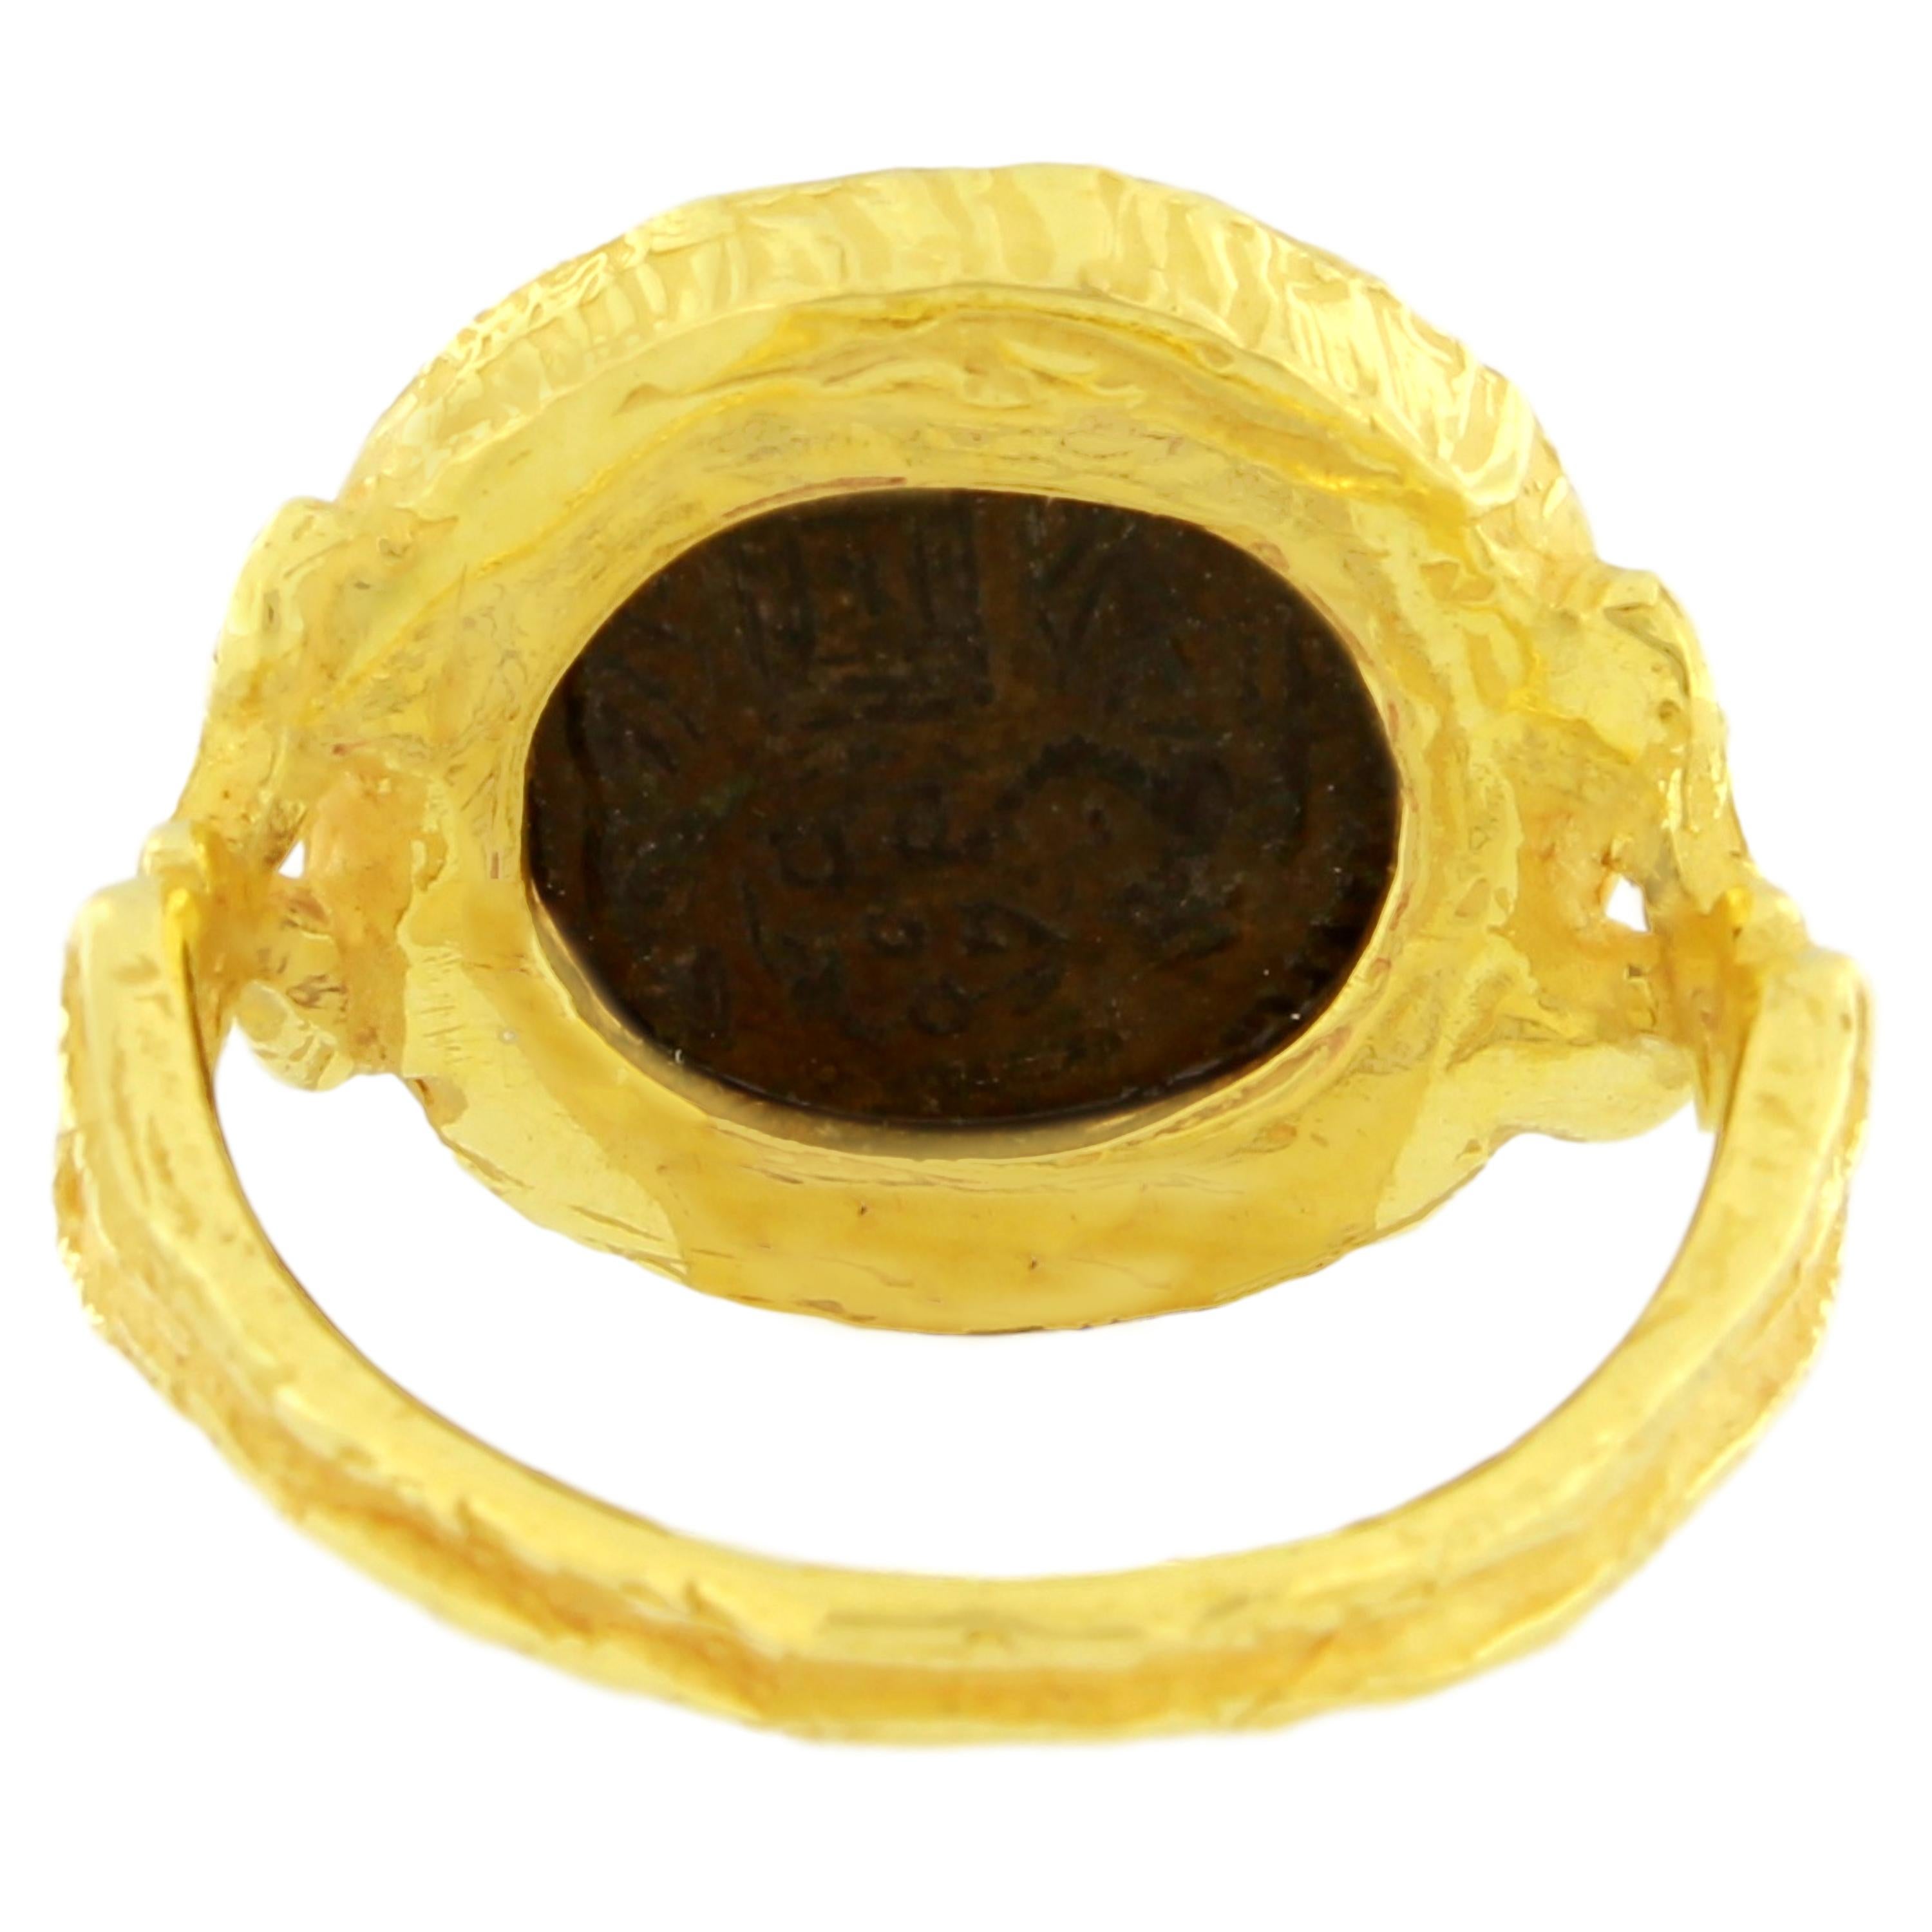 Sacchi Ancient Roman Coin Ring 18 Karat Satin Yellow Gold 1